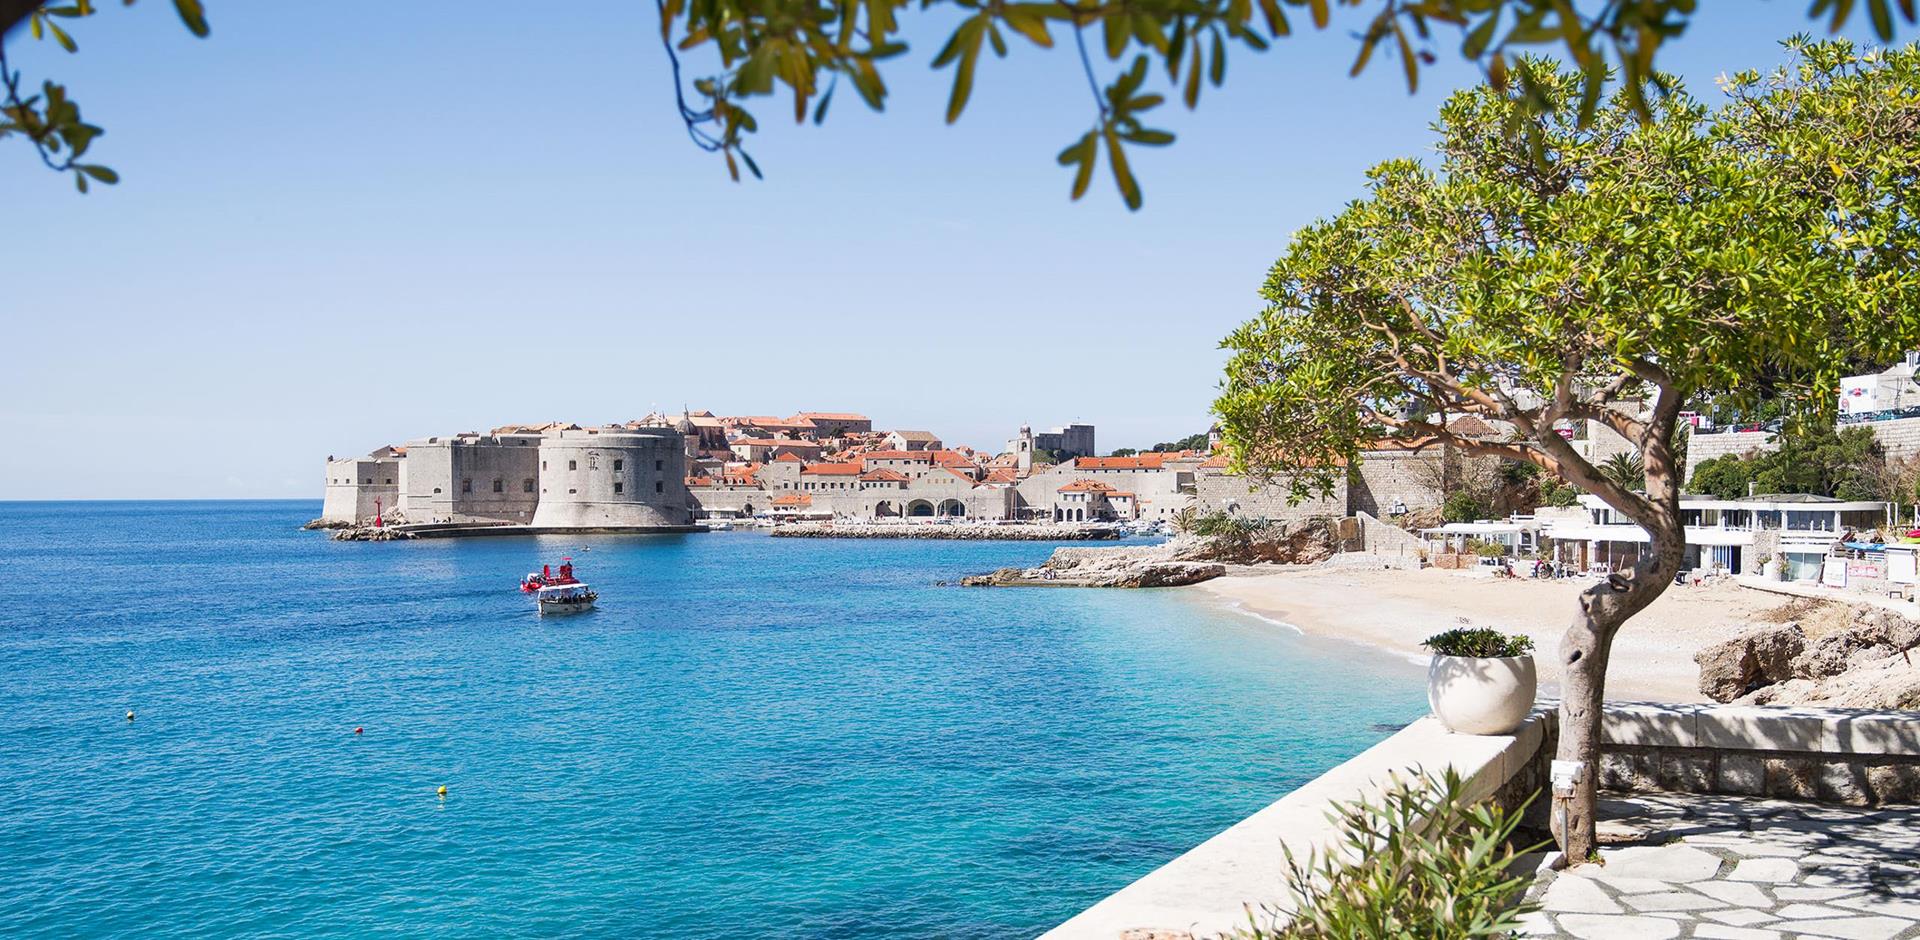 Coastal view from Palm Terrace near Hotel Excelsior, Dubrovnik, Croatia, Europe